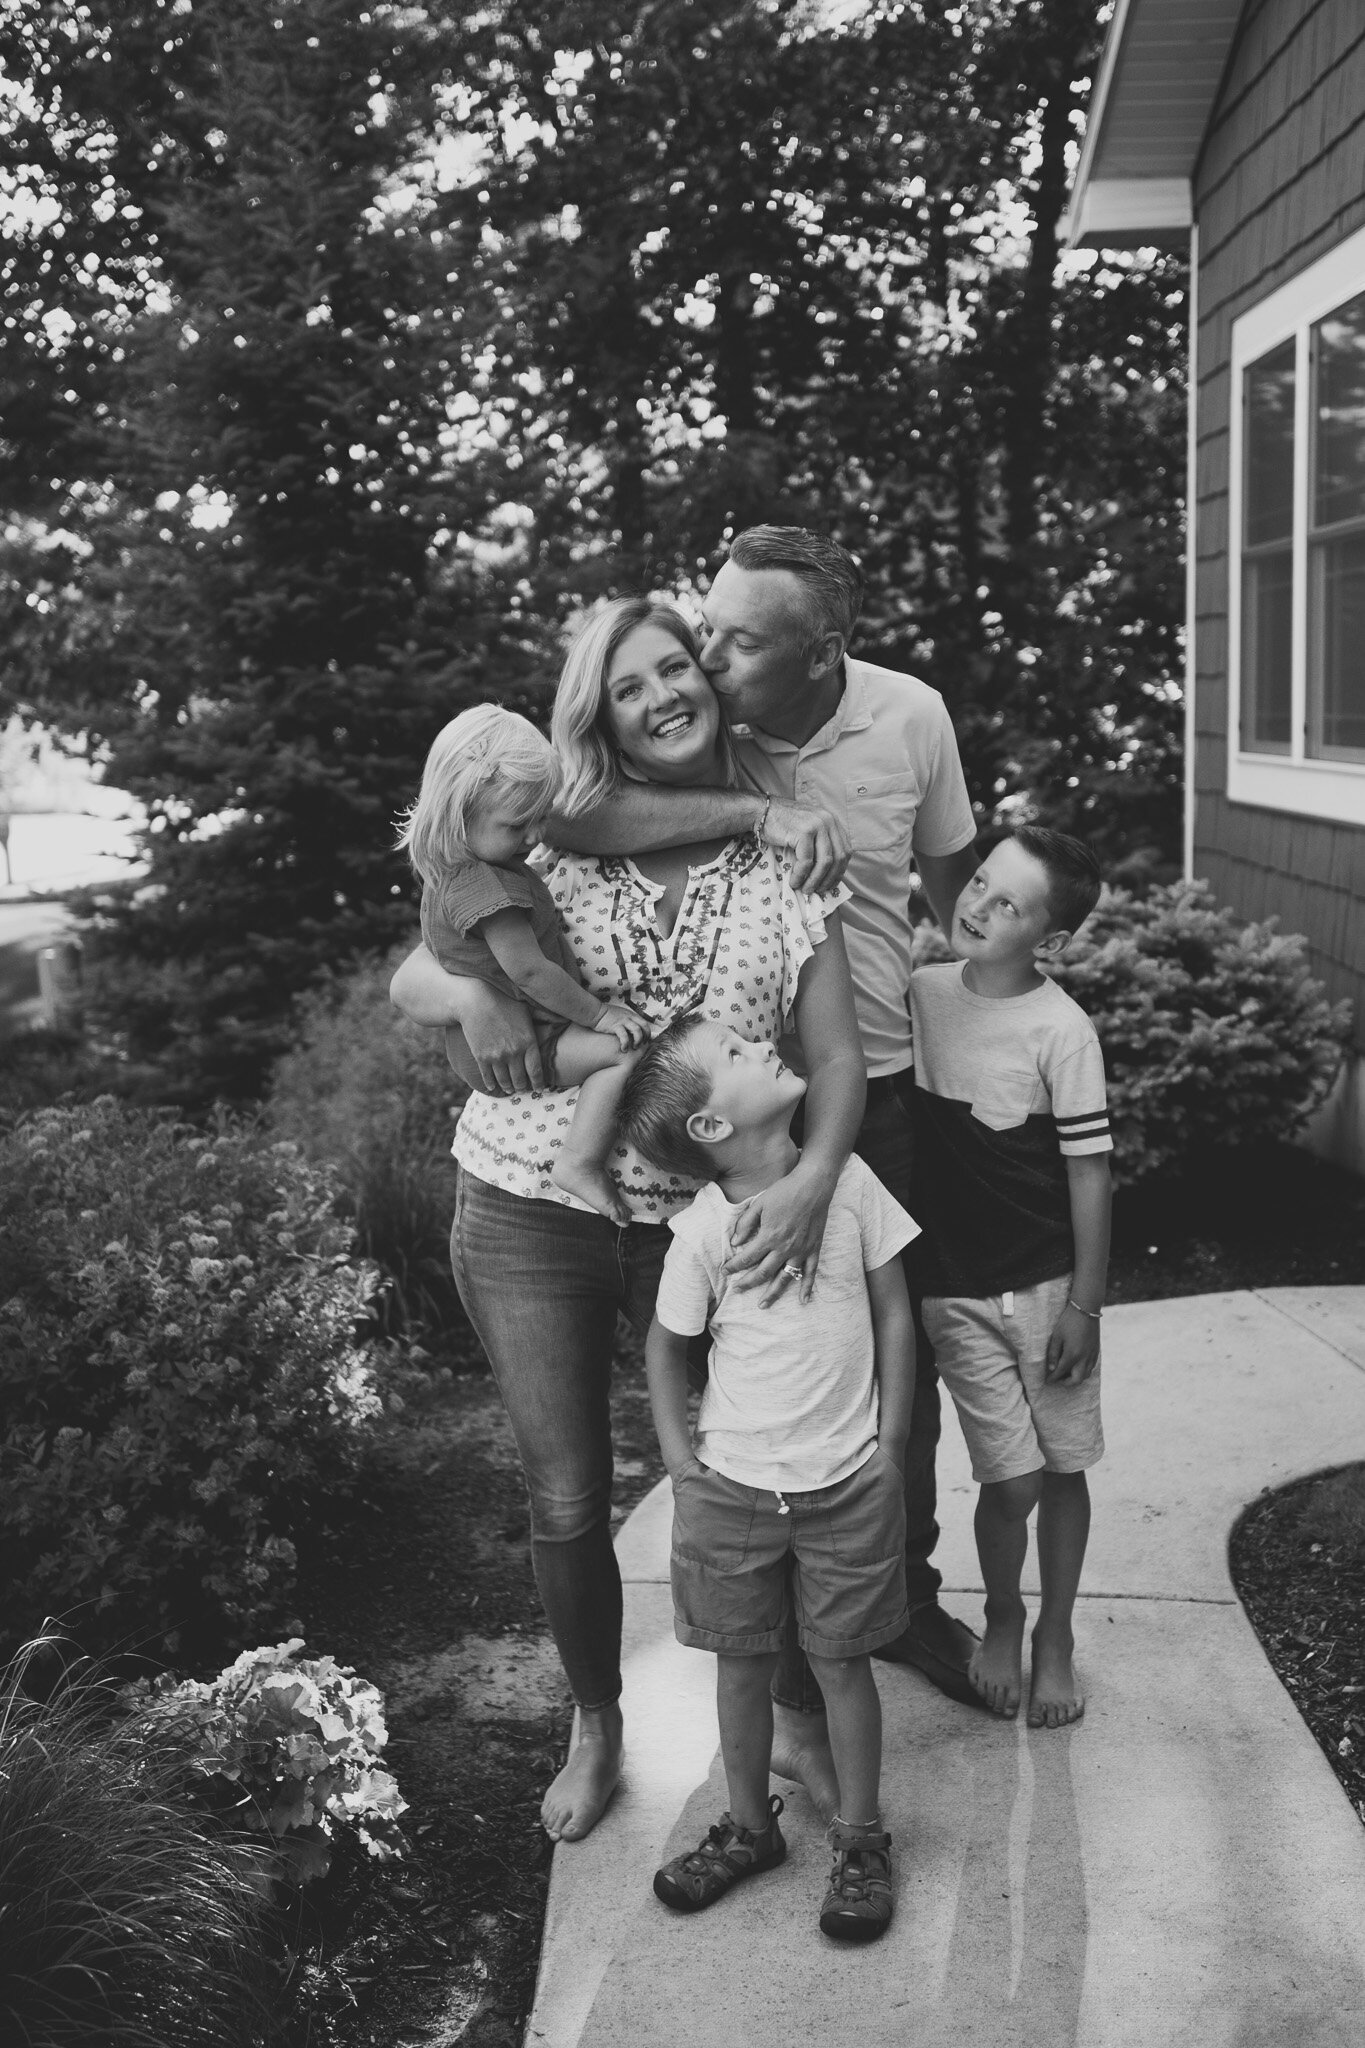 Clabuesch Family - Grand Rapids Family Photographer - Grand Rapids Lifestyle Photographer - Jessica Darling - J Darling Photo008.jpg